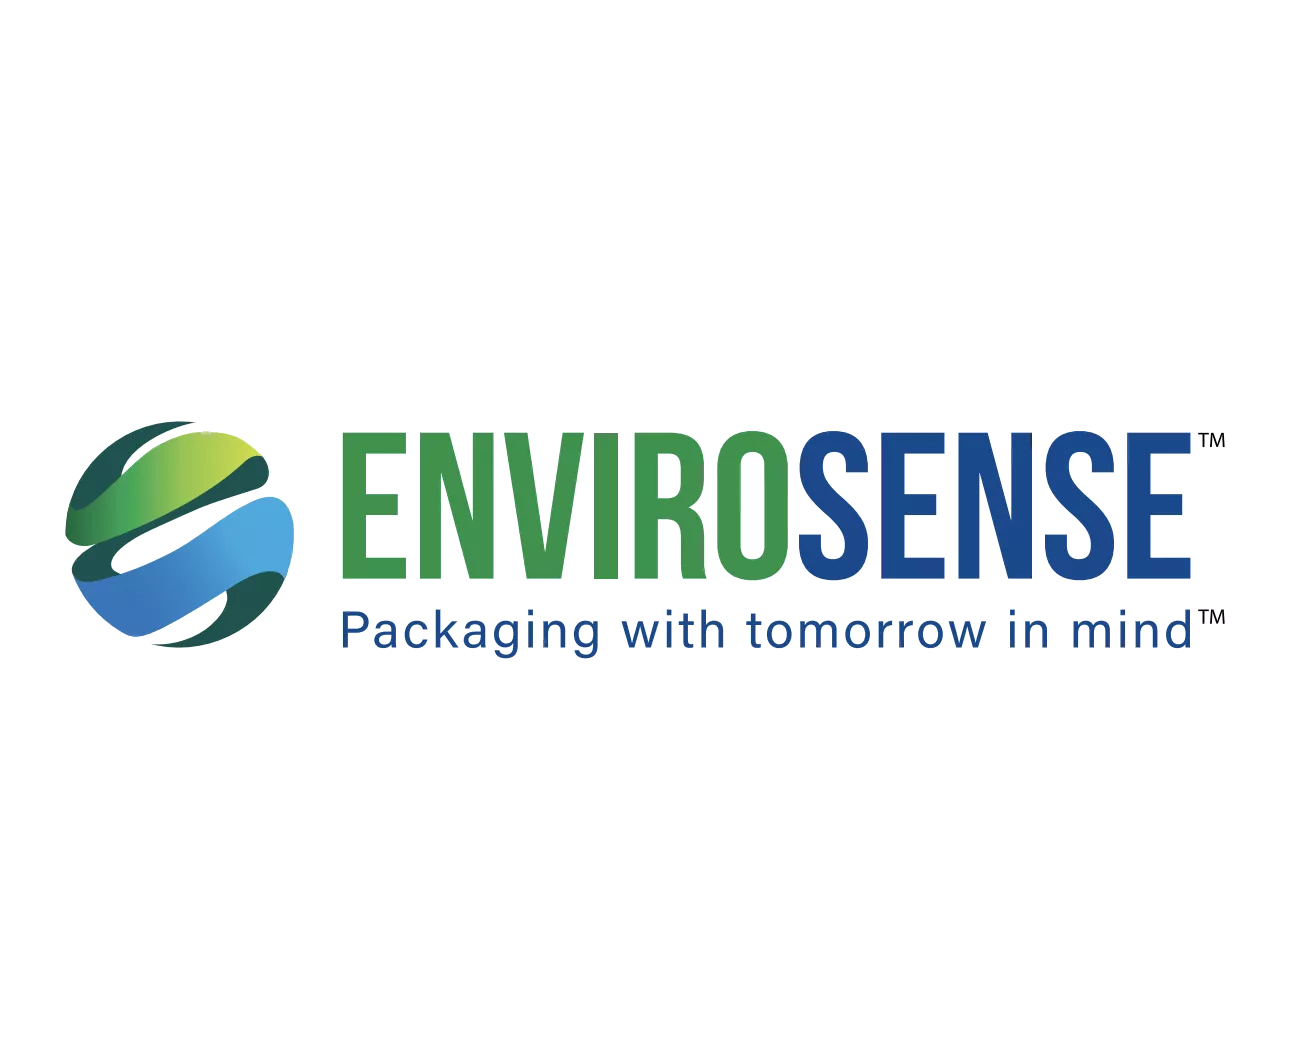 EnviroSense Logo - "Packaging With Tomorrow in Mind"